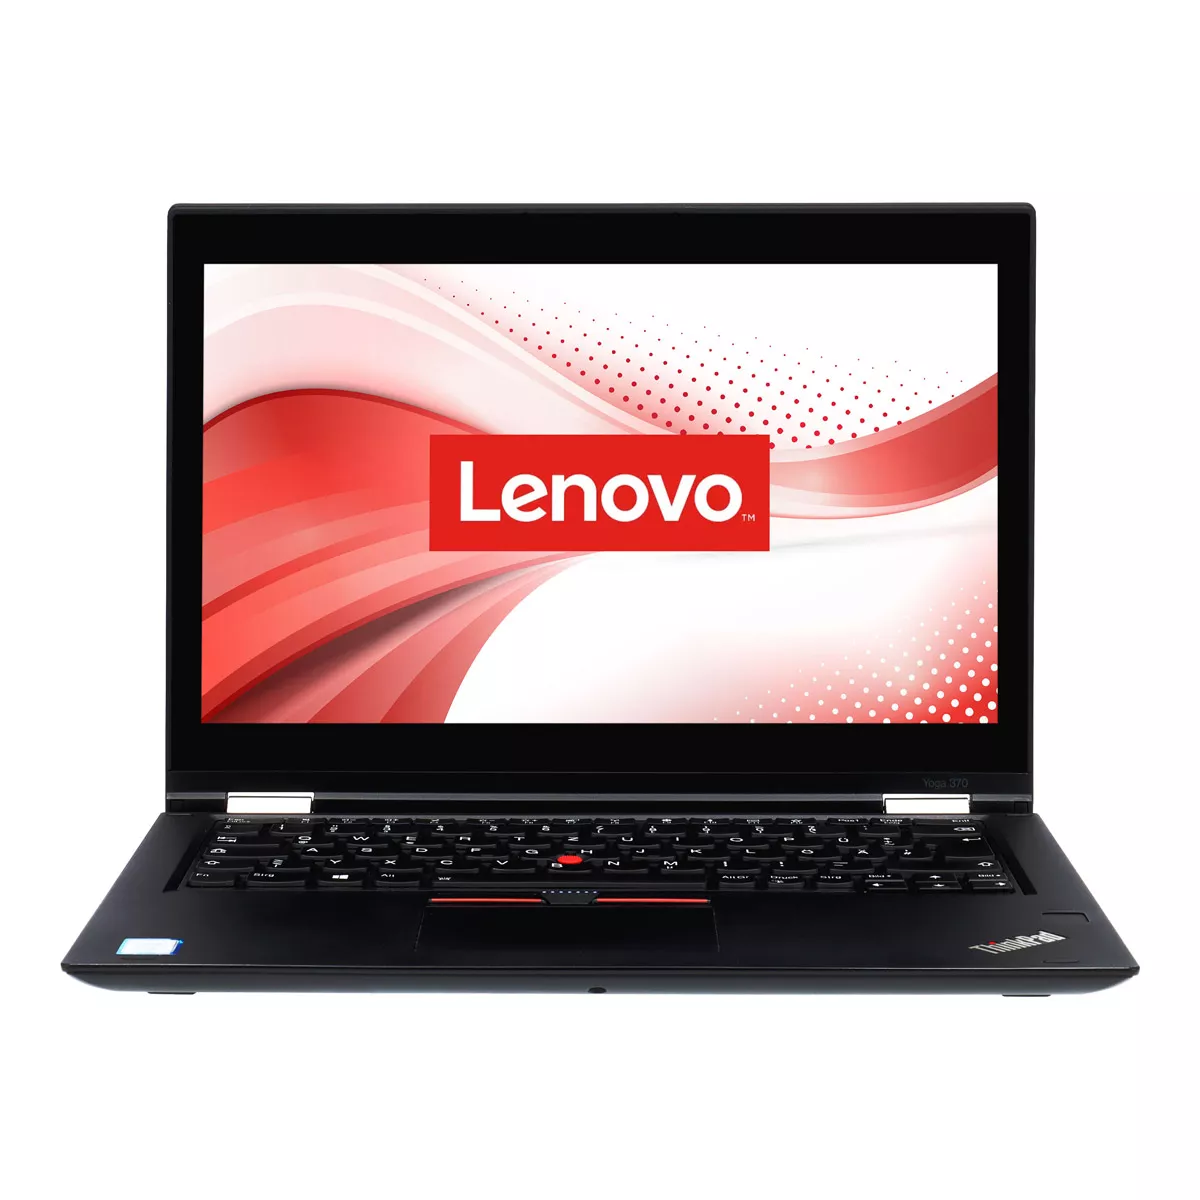 Lenovo ThinkPad Yoga 370 Core i5 7300U Full-HD Touch 8 GB 240 GB m.2 SSD Webcam A+